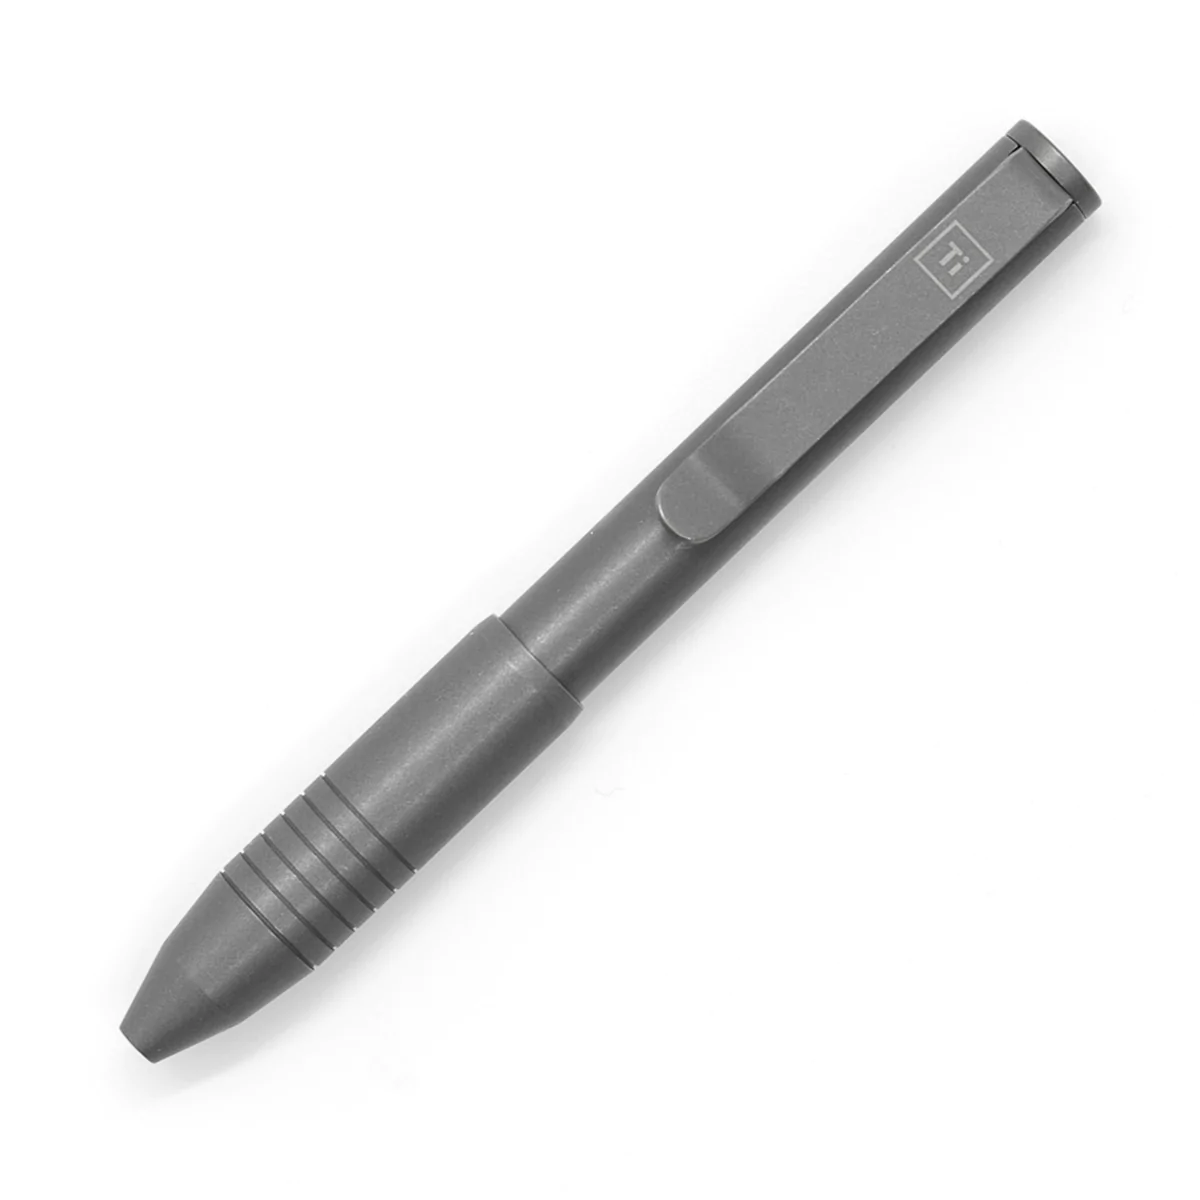 Big Idea Design Ti Pocket Pro - The Auto Adjusting EDC Pen